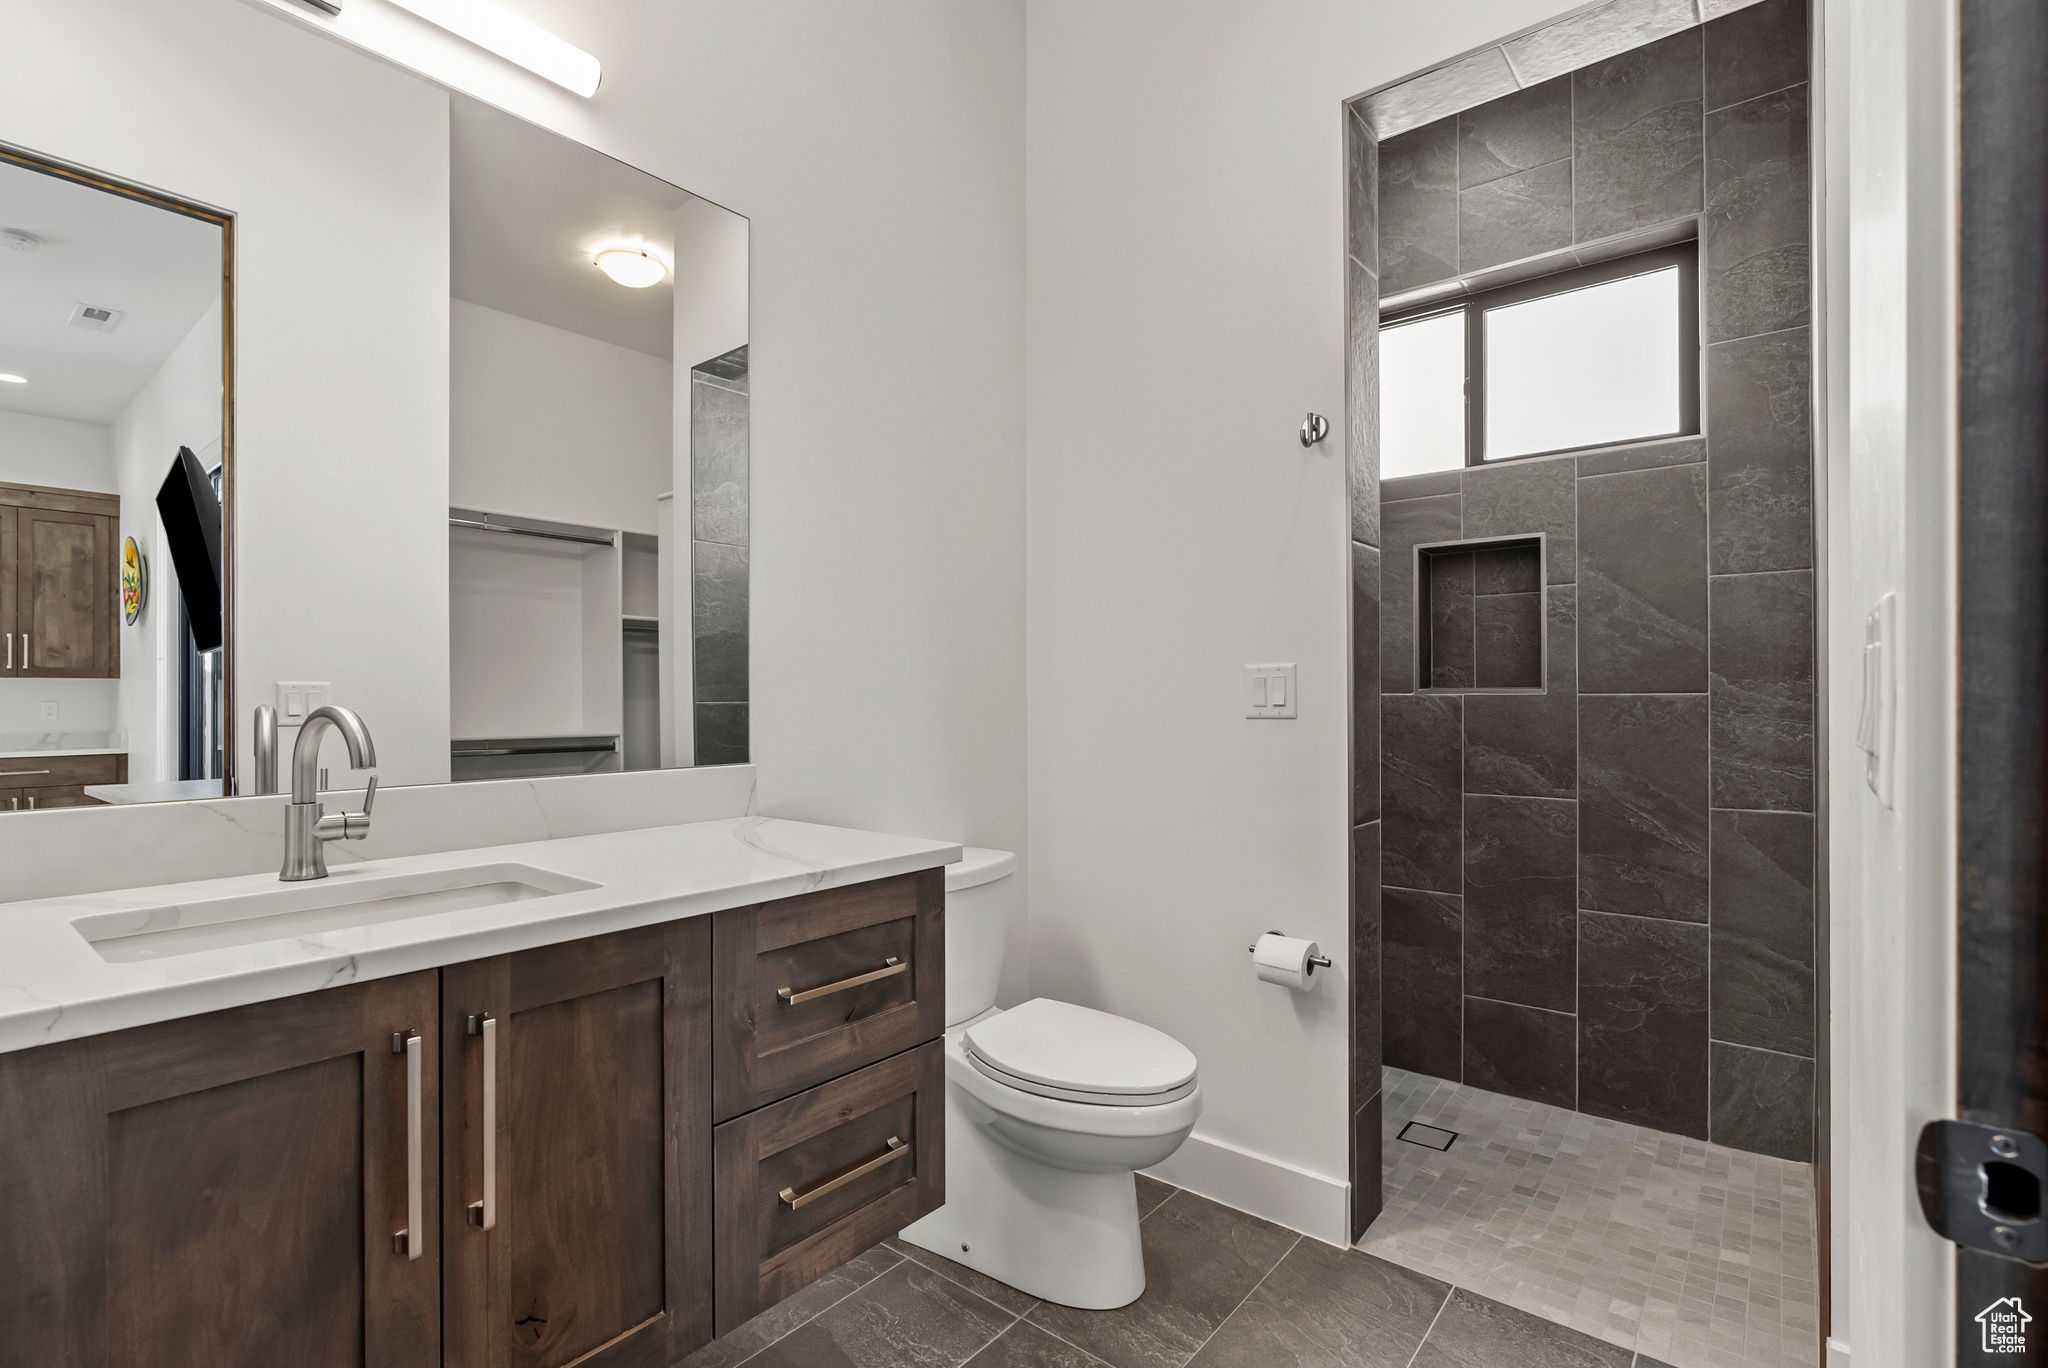 Bathroom featuring tile flooring, tiled shower, vanity, and toilet, Casita Bathroom